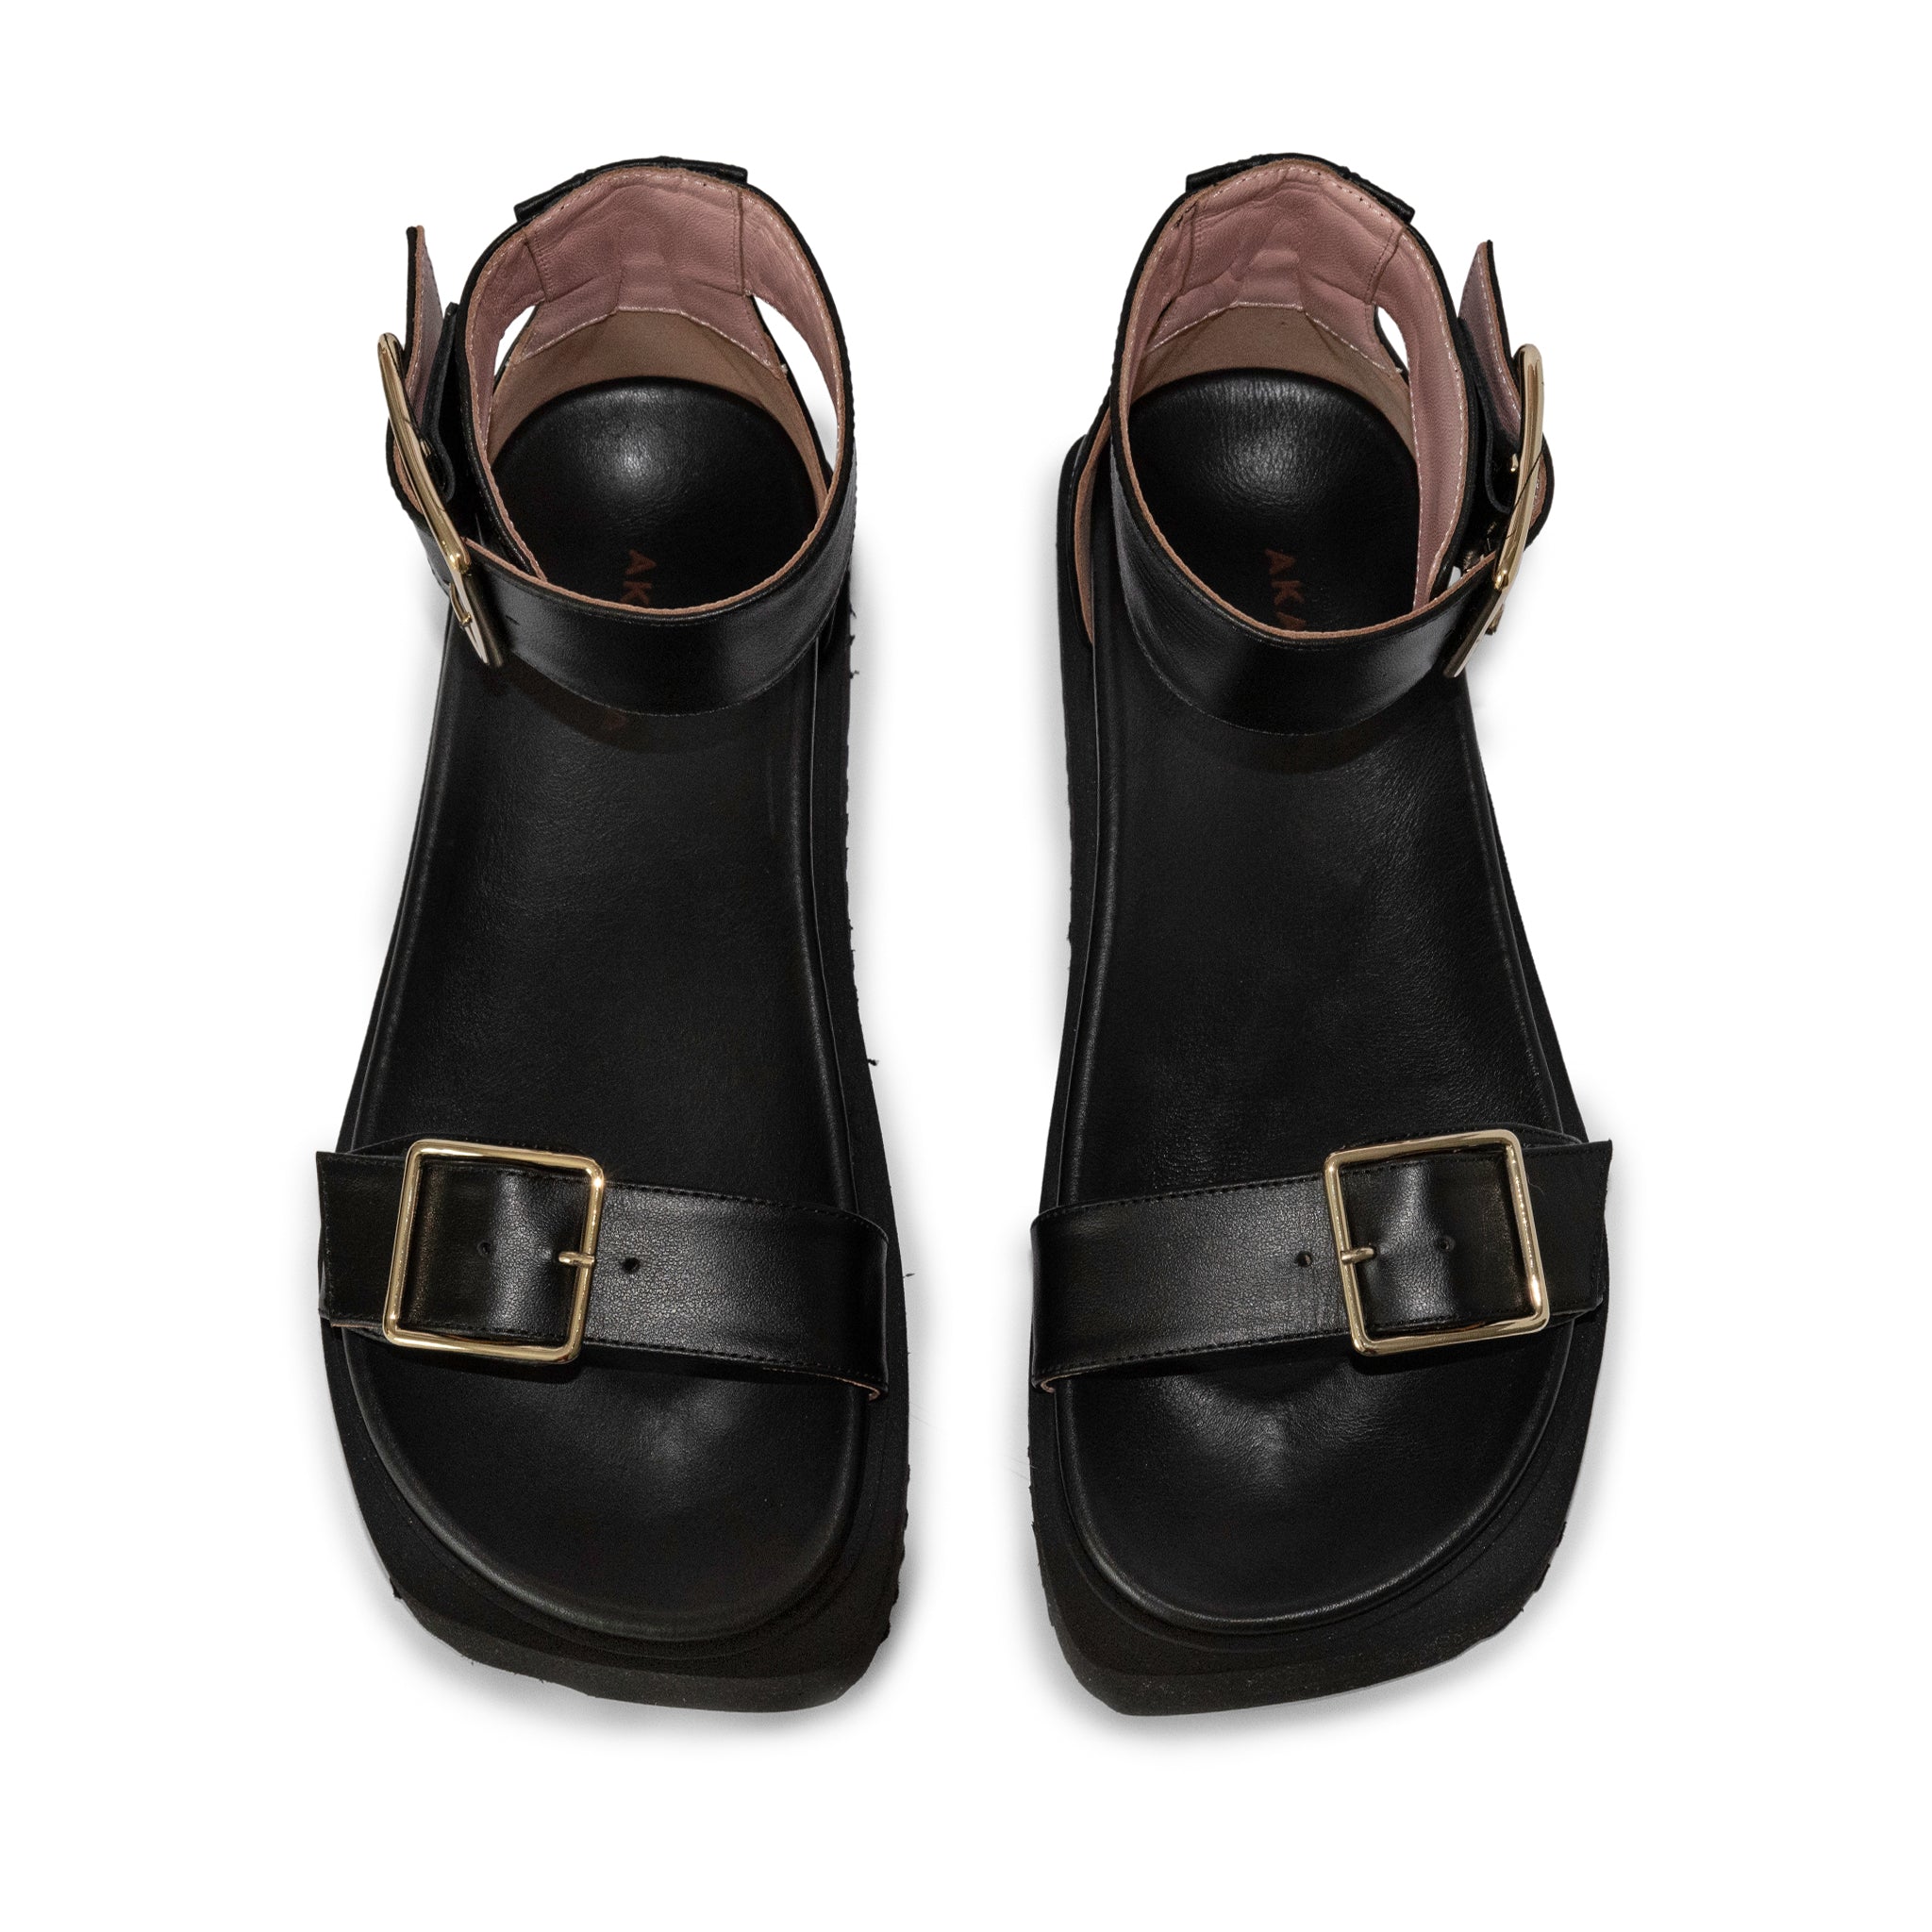 Maru Black Leather Sandals LES7487-BLACK-3